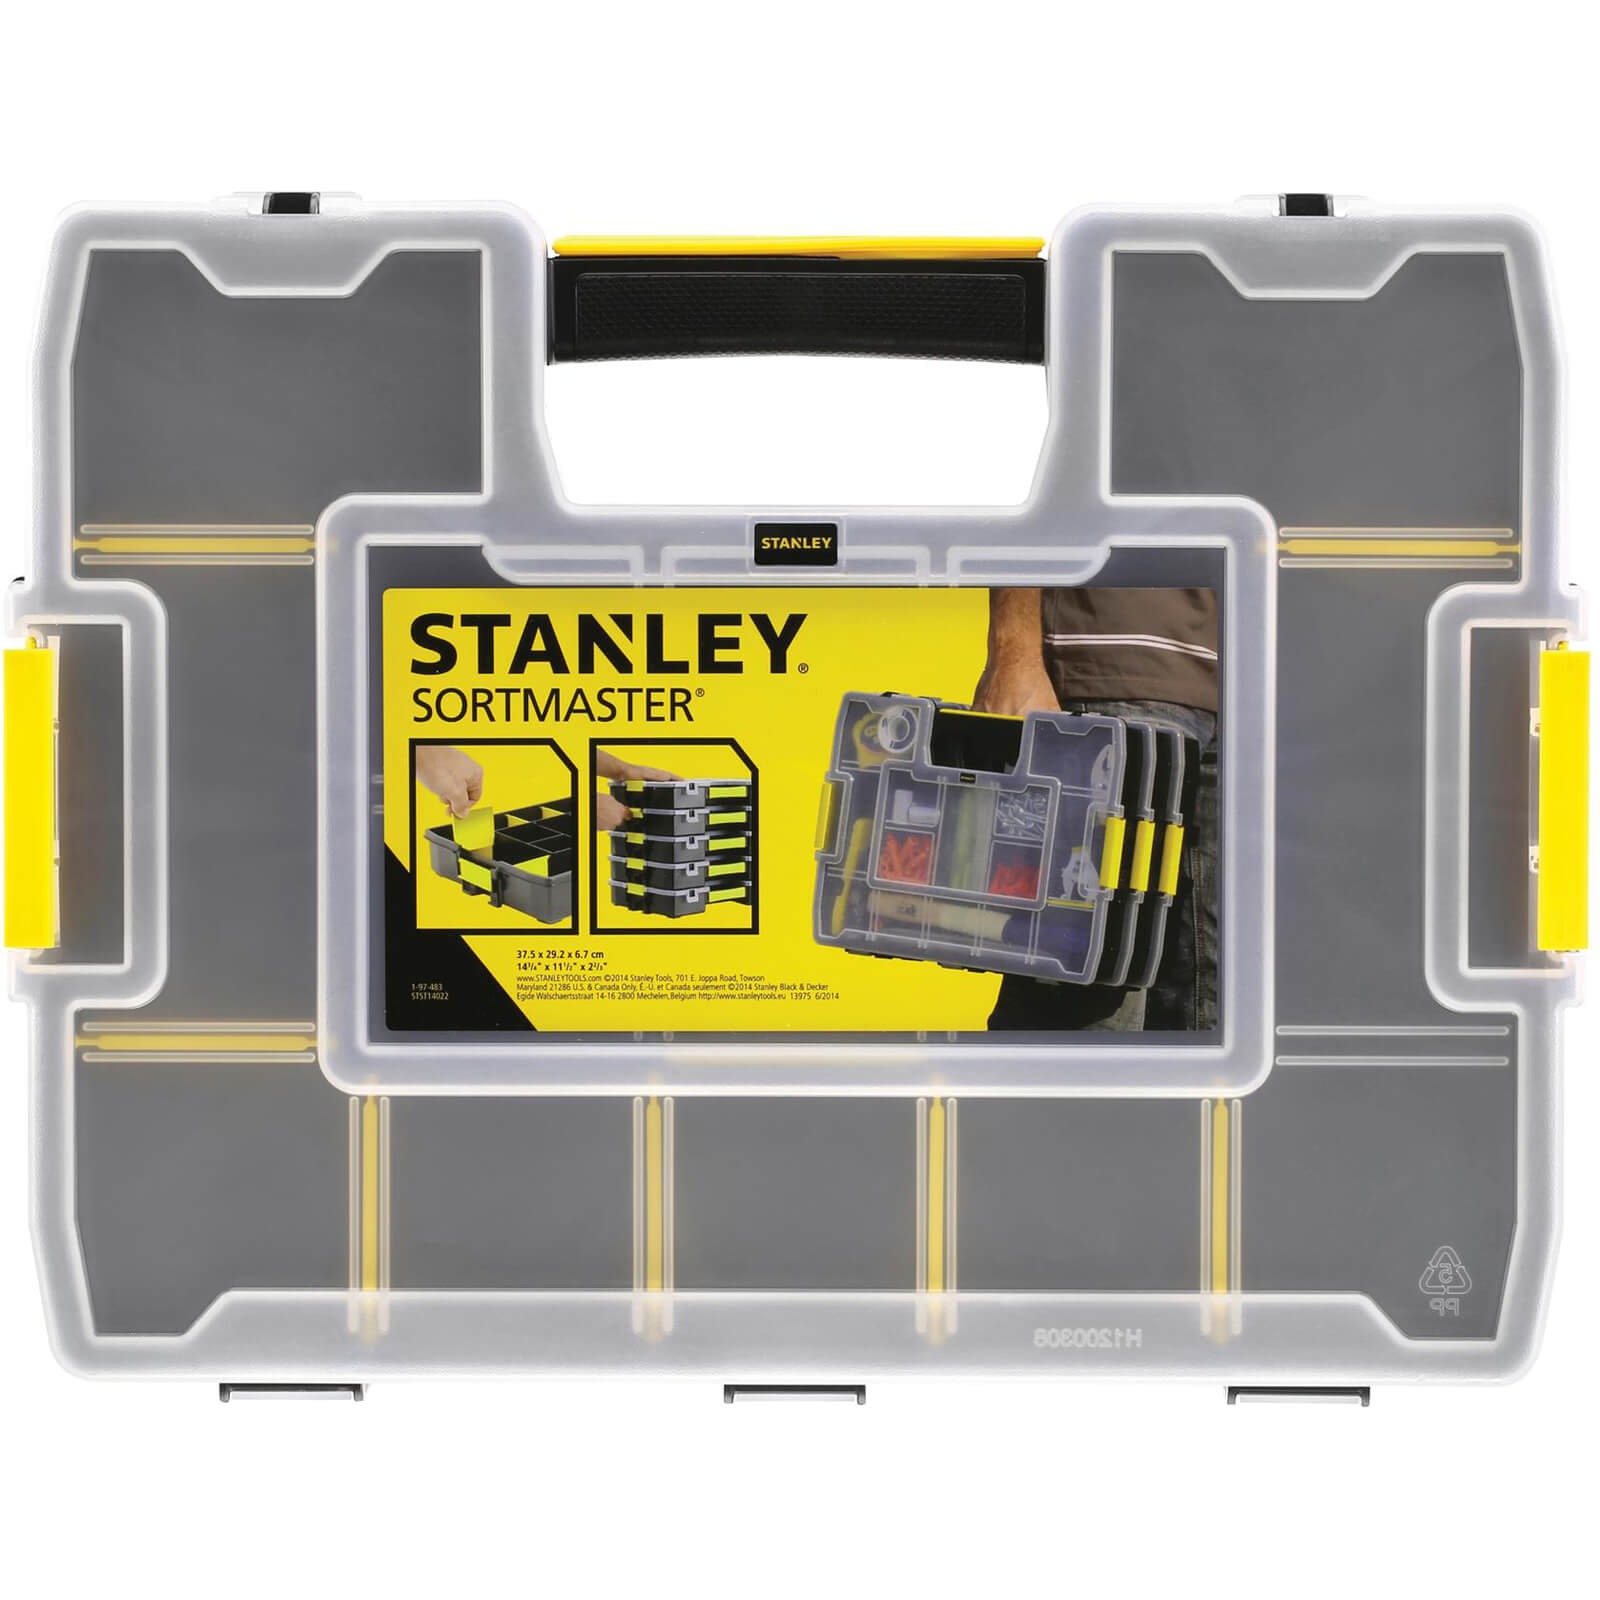 Image of Stanley 14 Compartment Stackable Sortmaster Junior Organiser Box